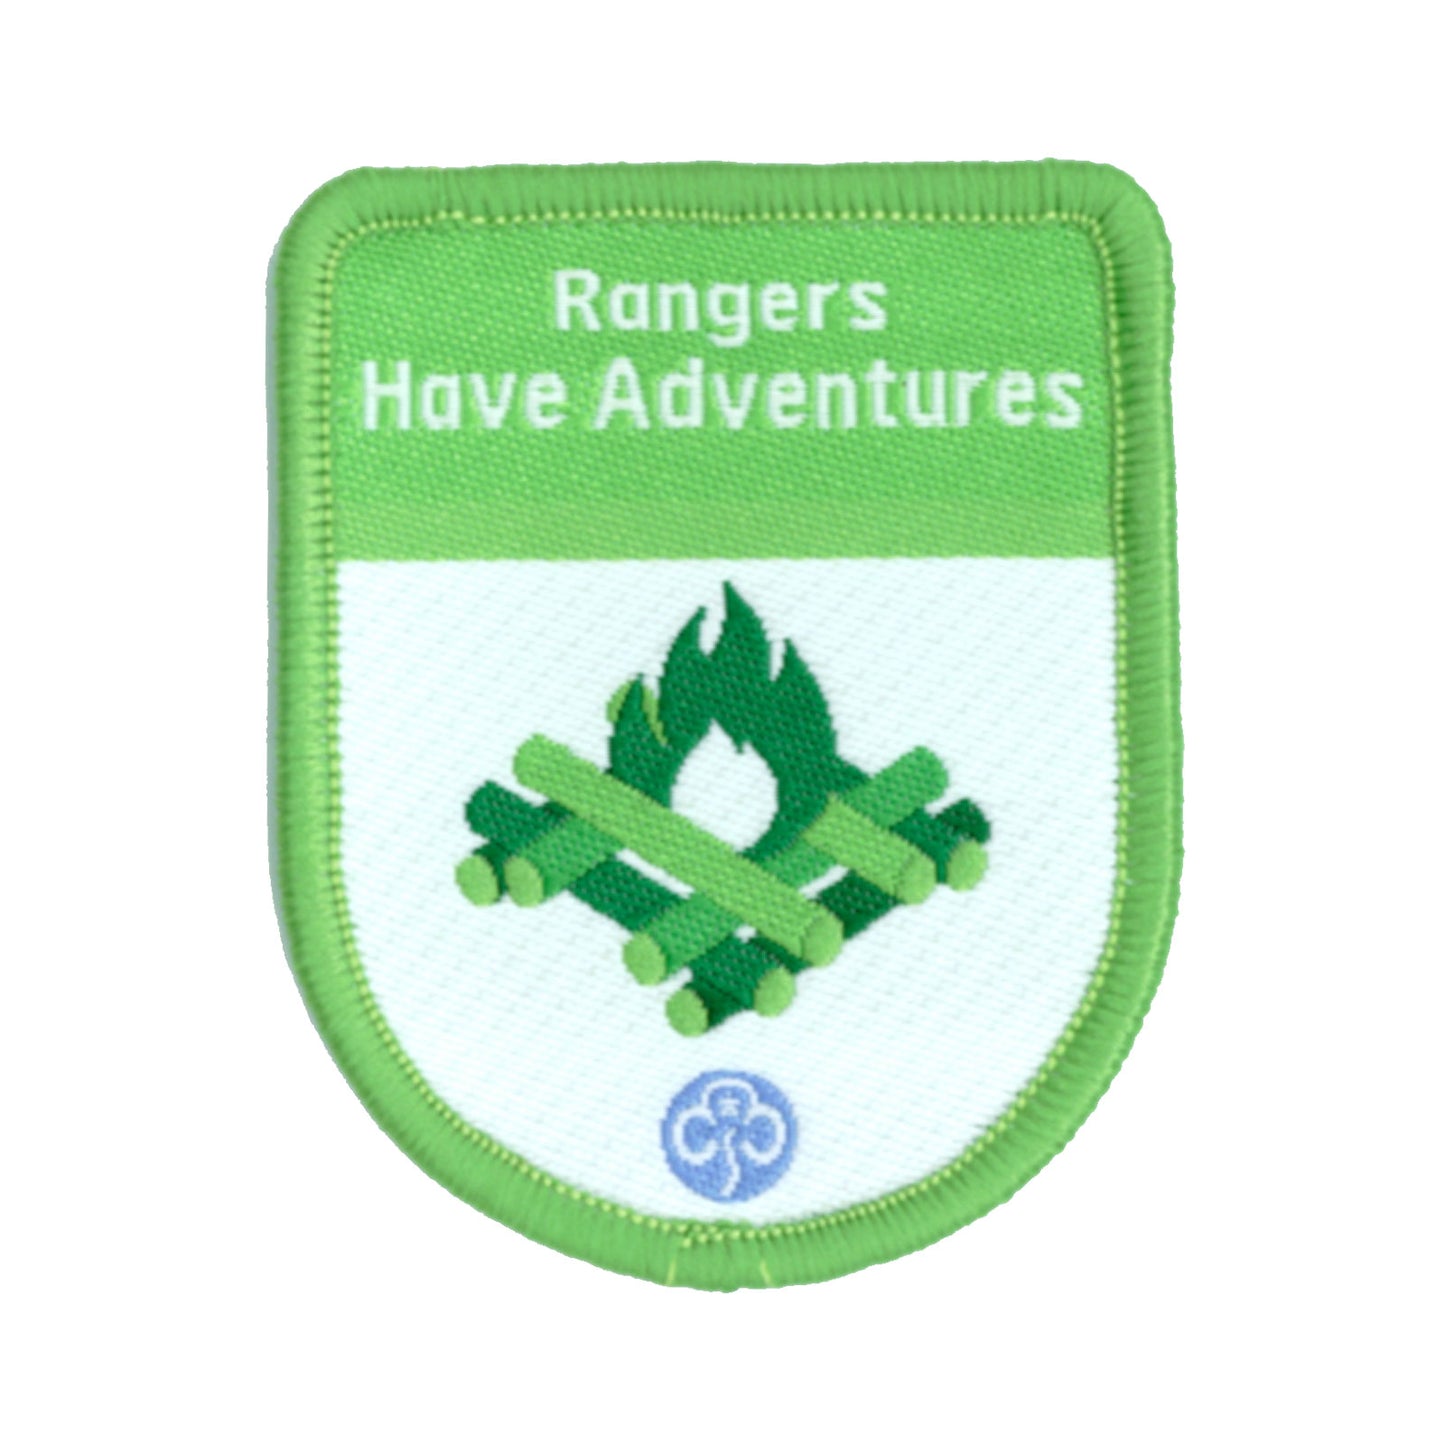 Rangers Have Adventures Theme Award Woven Badge